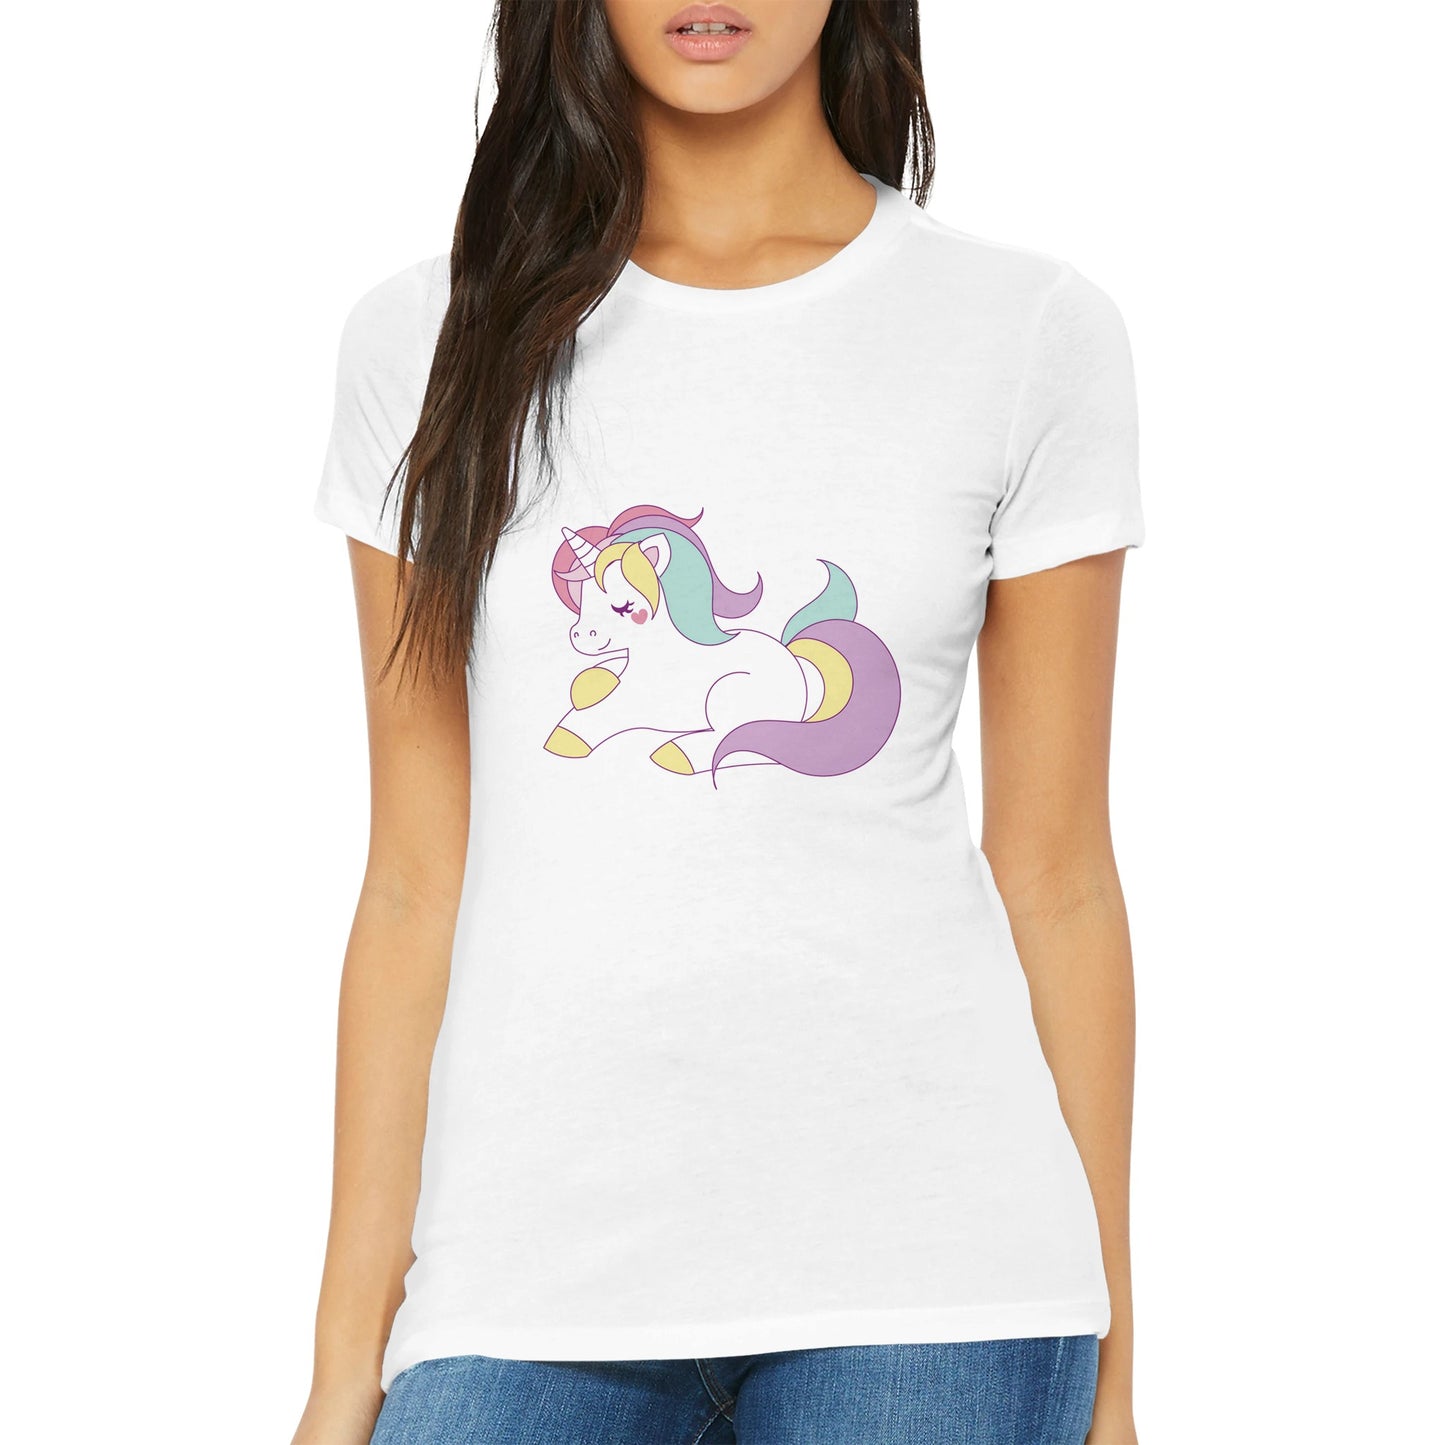 Artwork T-shirt - Unicorn Artwork - Premium Women's T-shirt 